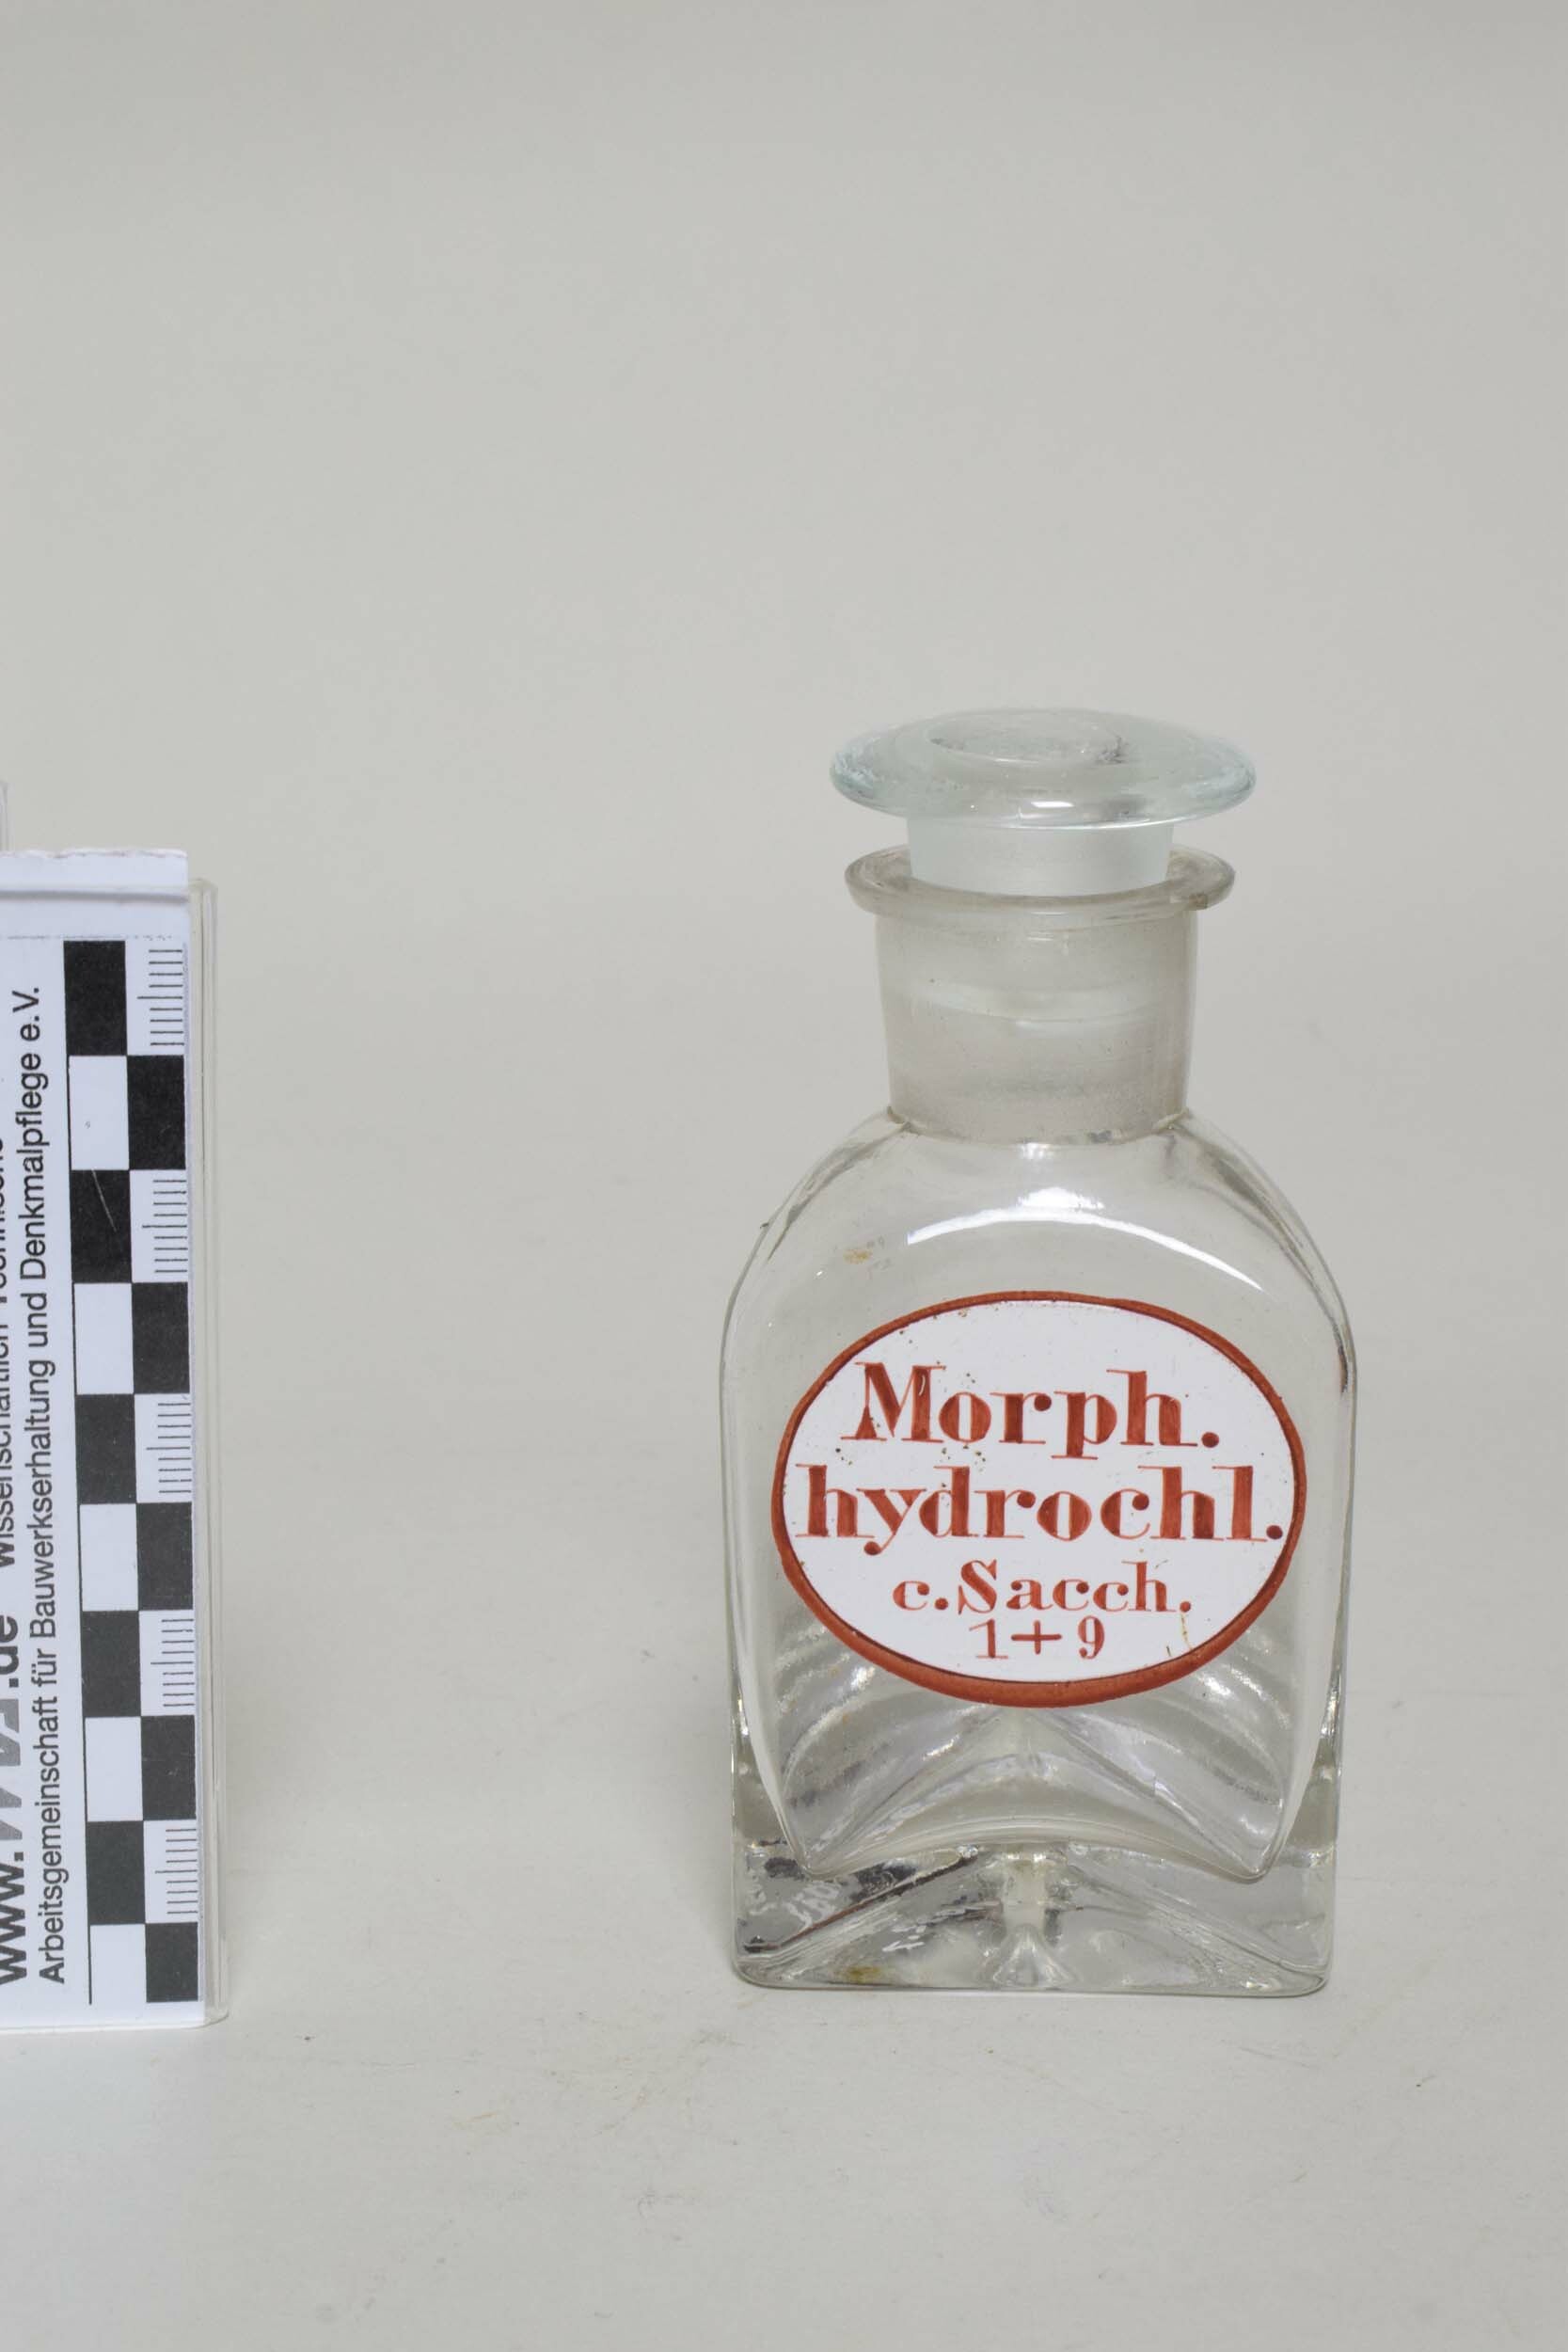 Apothekenflasche "Morph. Hydrochl. C. Sacch." (Heimatmuseum Dohna CC BY-NC-SA)